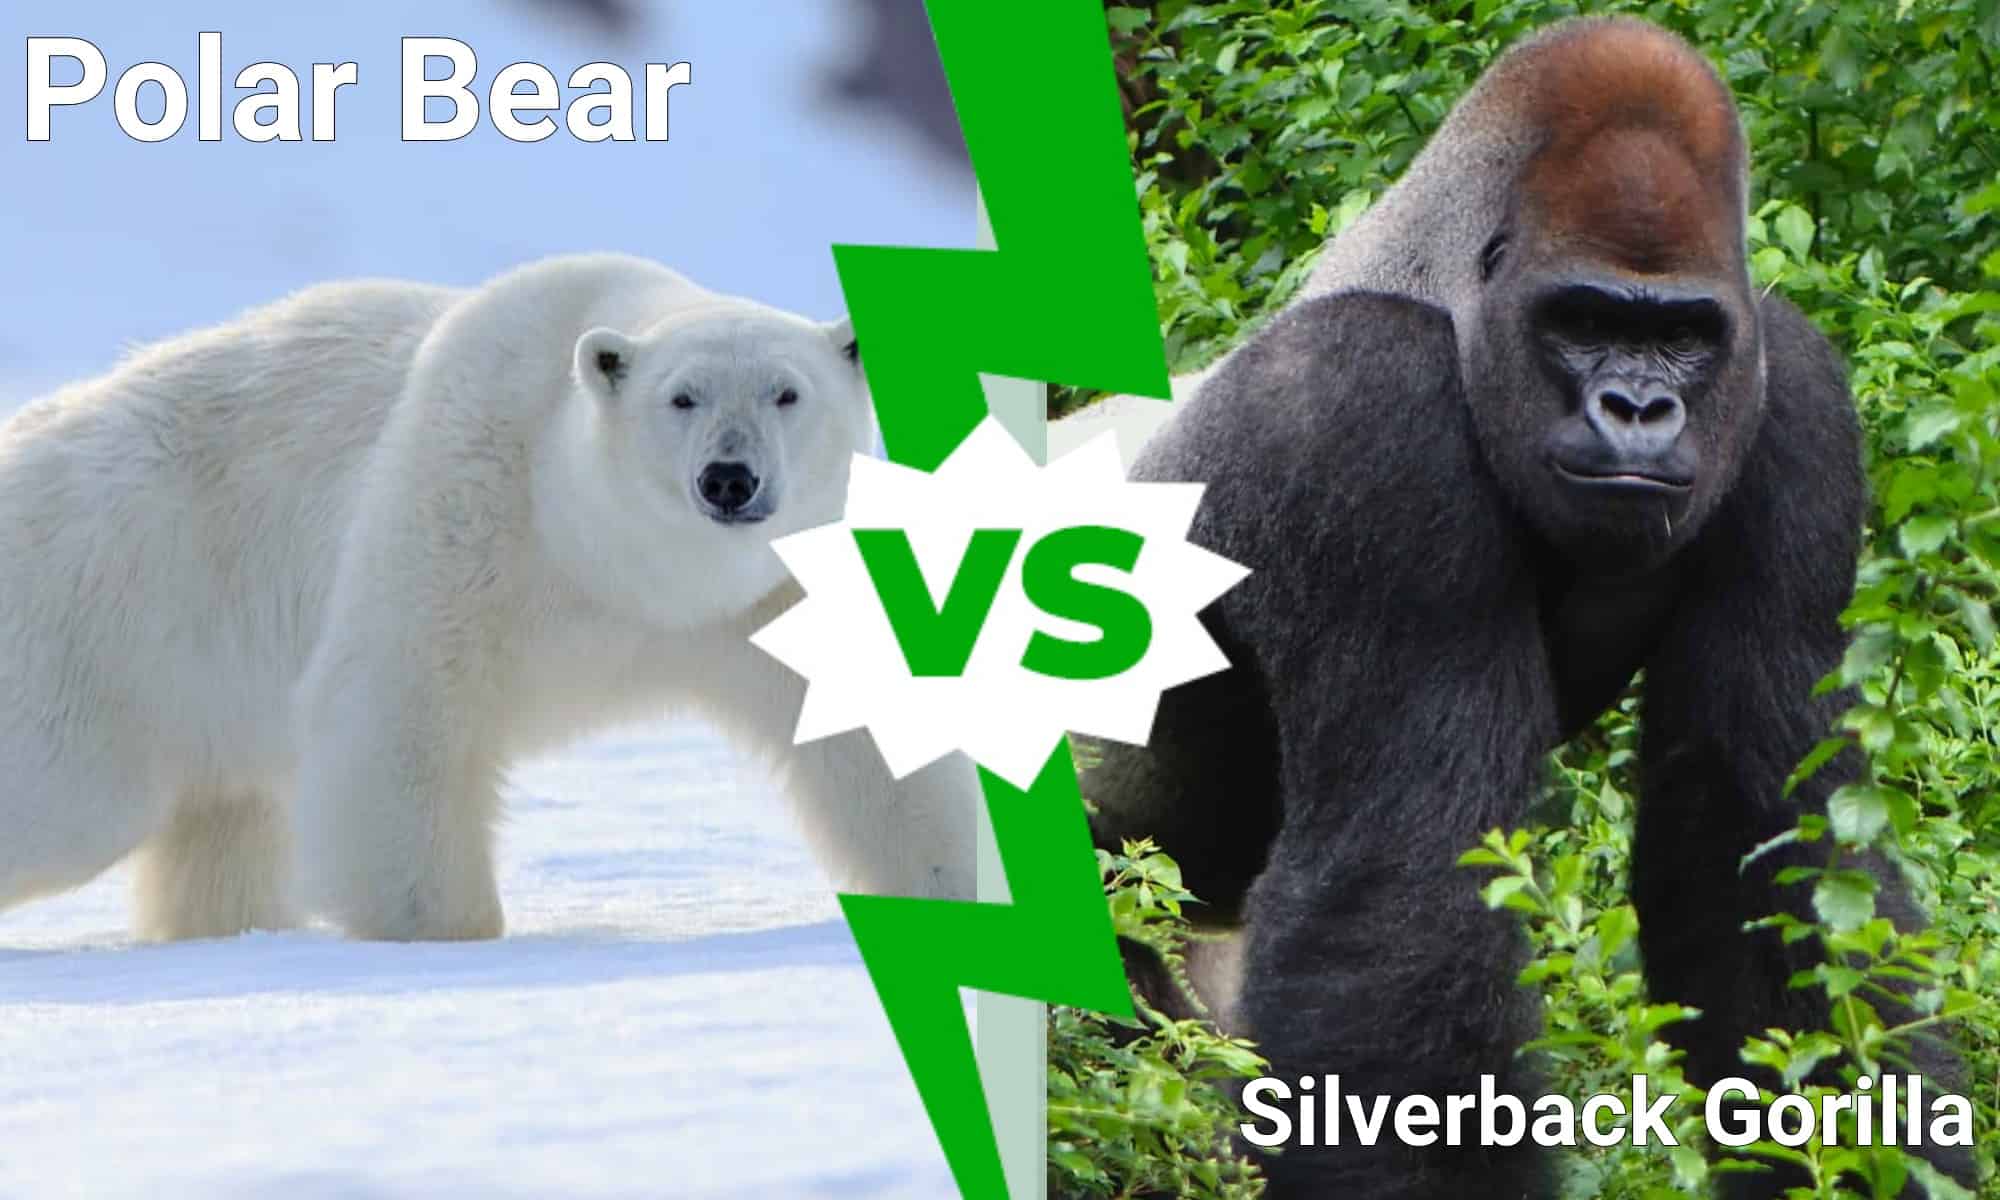 Who would win polar bear or gorilla?